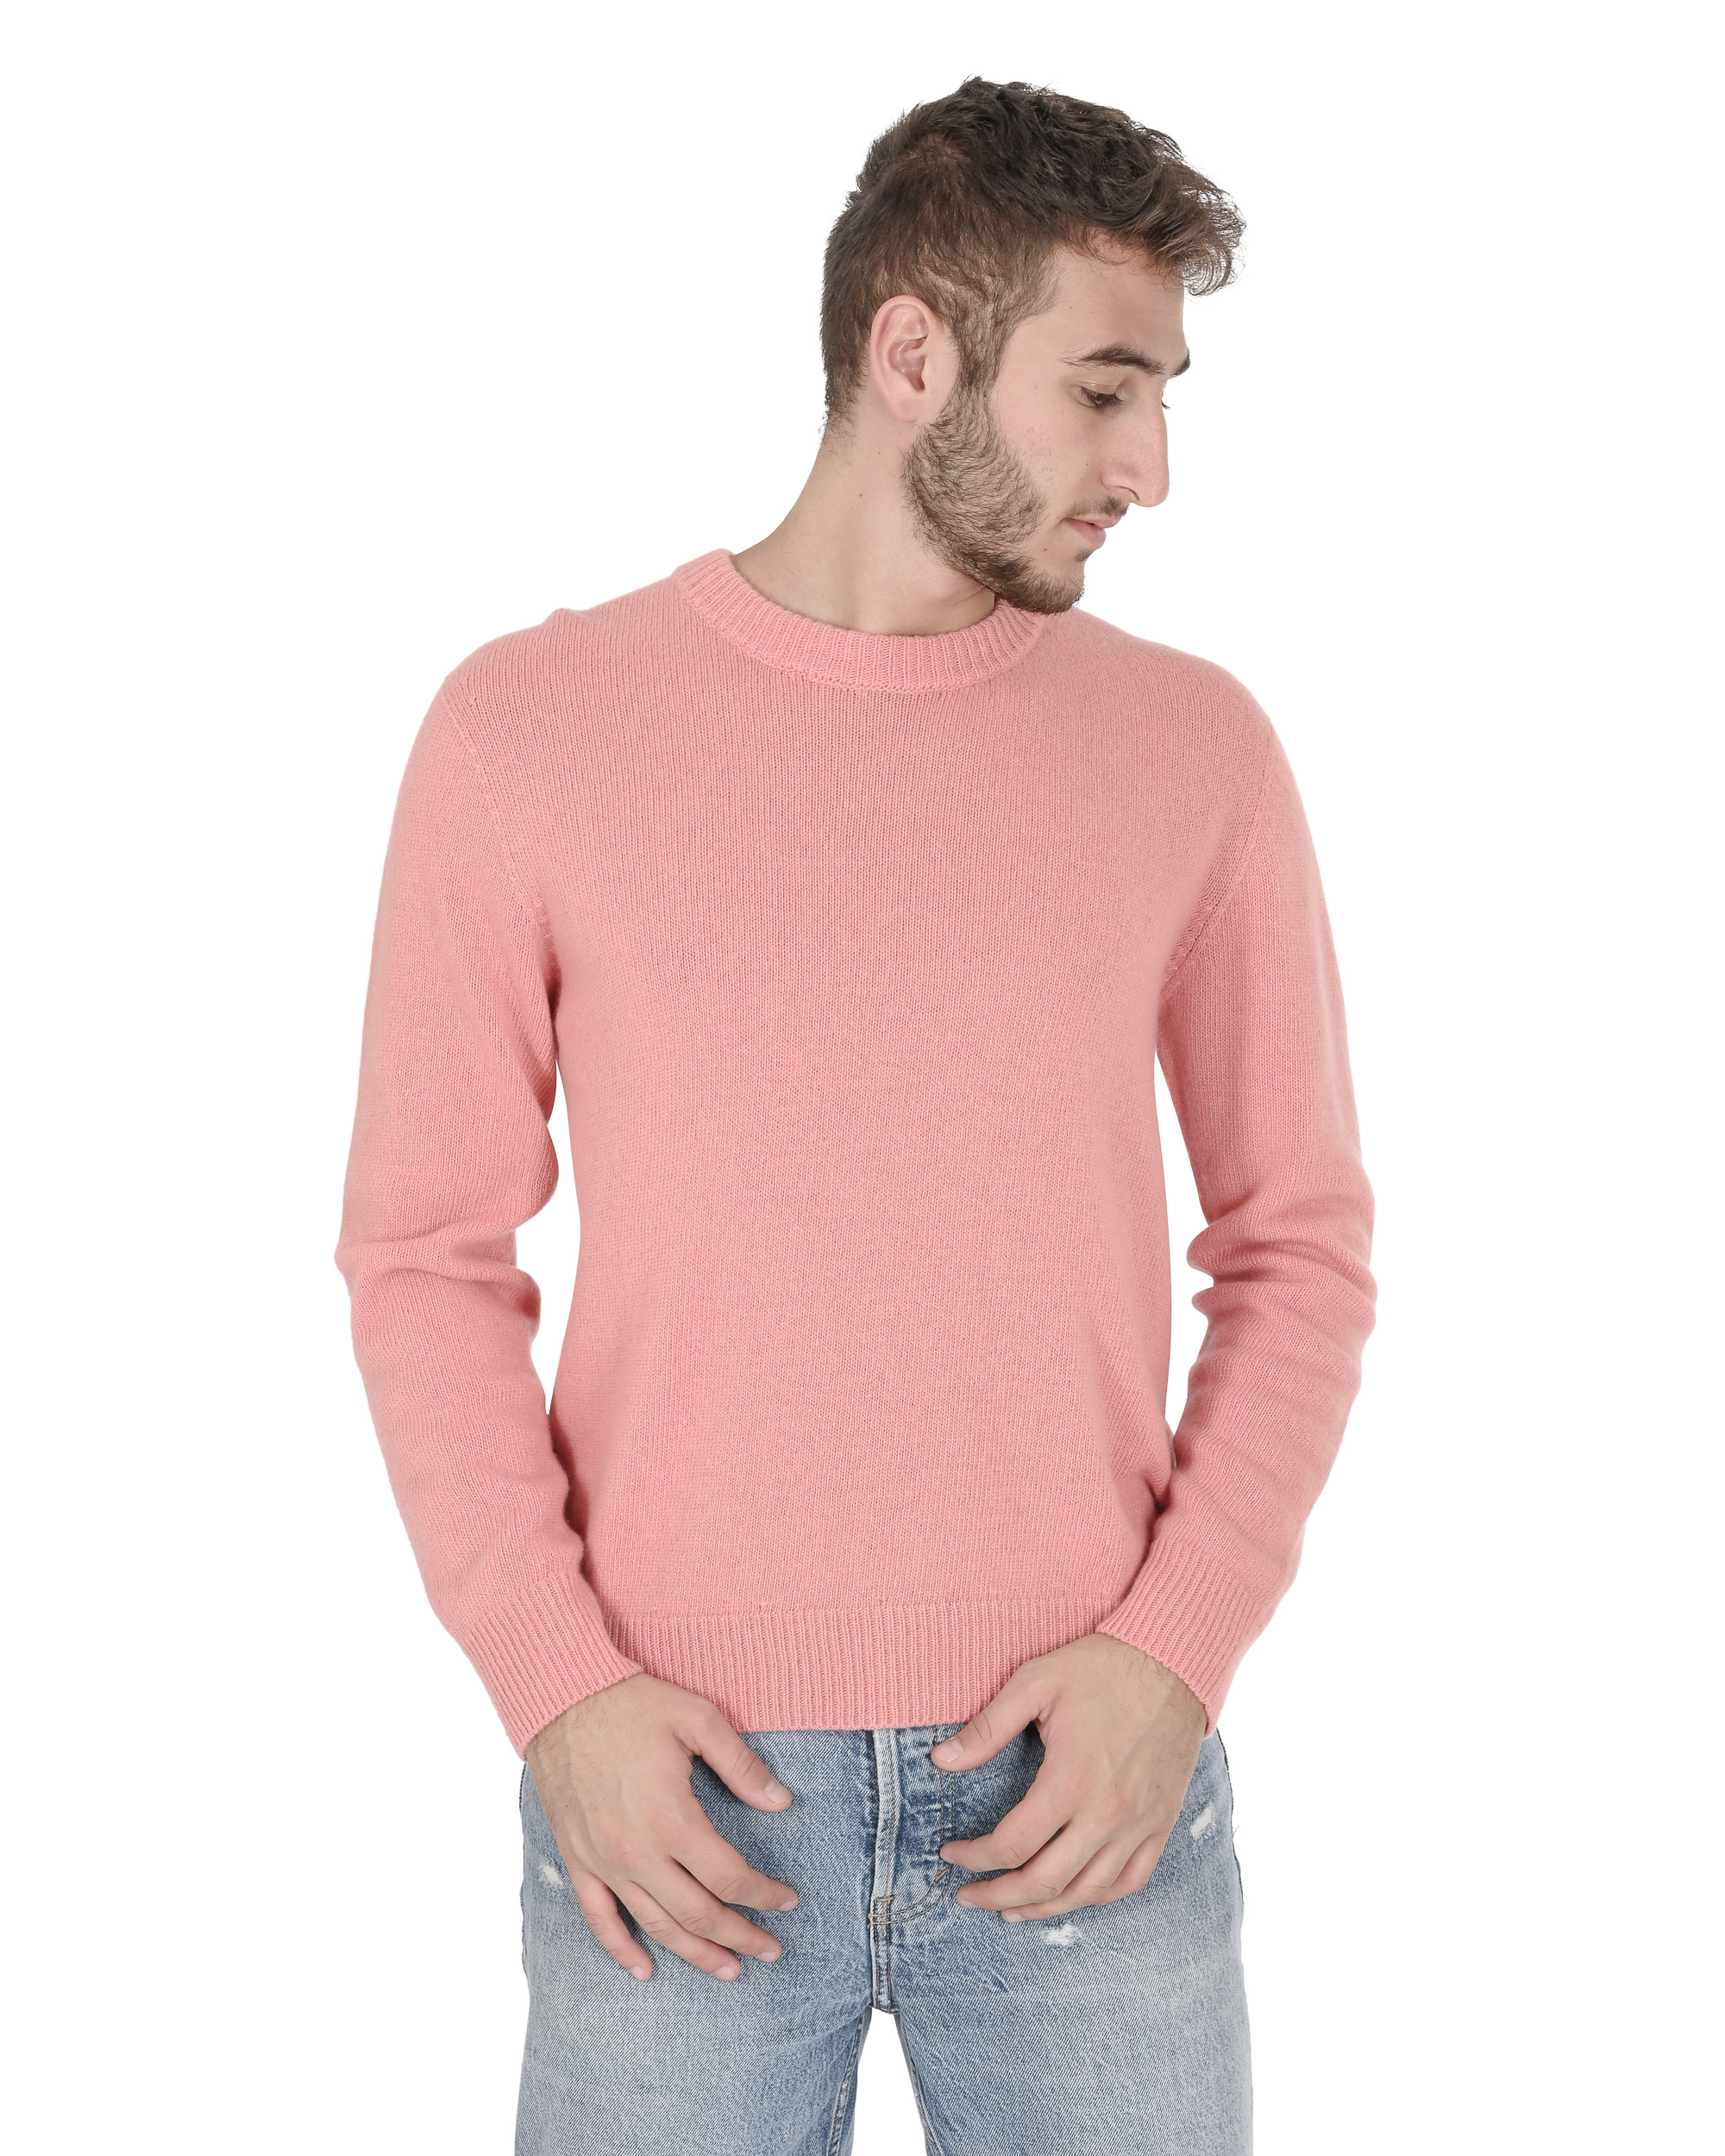 Refined Cashmere V-Neck Sweater